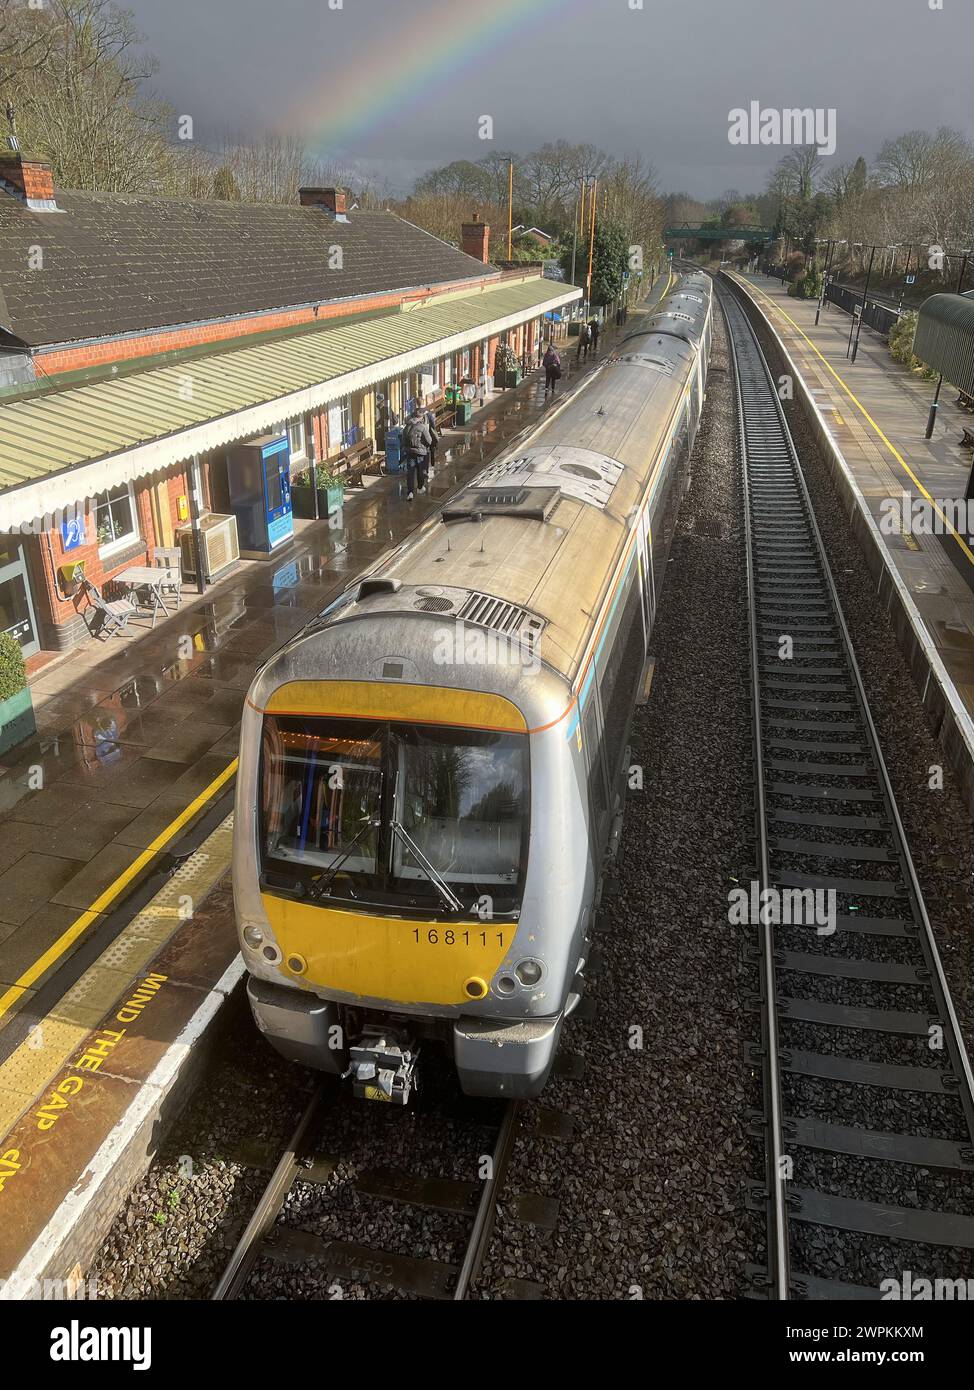 British Network Rail passenger commuter suburban station West Midlands England UK Rainbow over tracks. Stock Photo